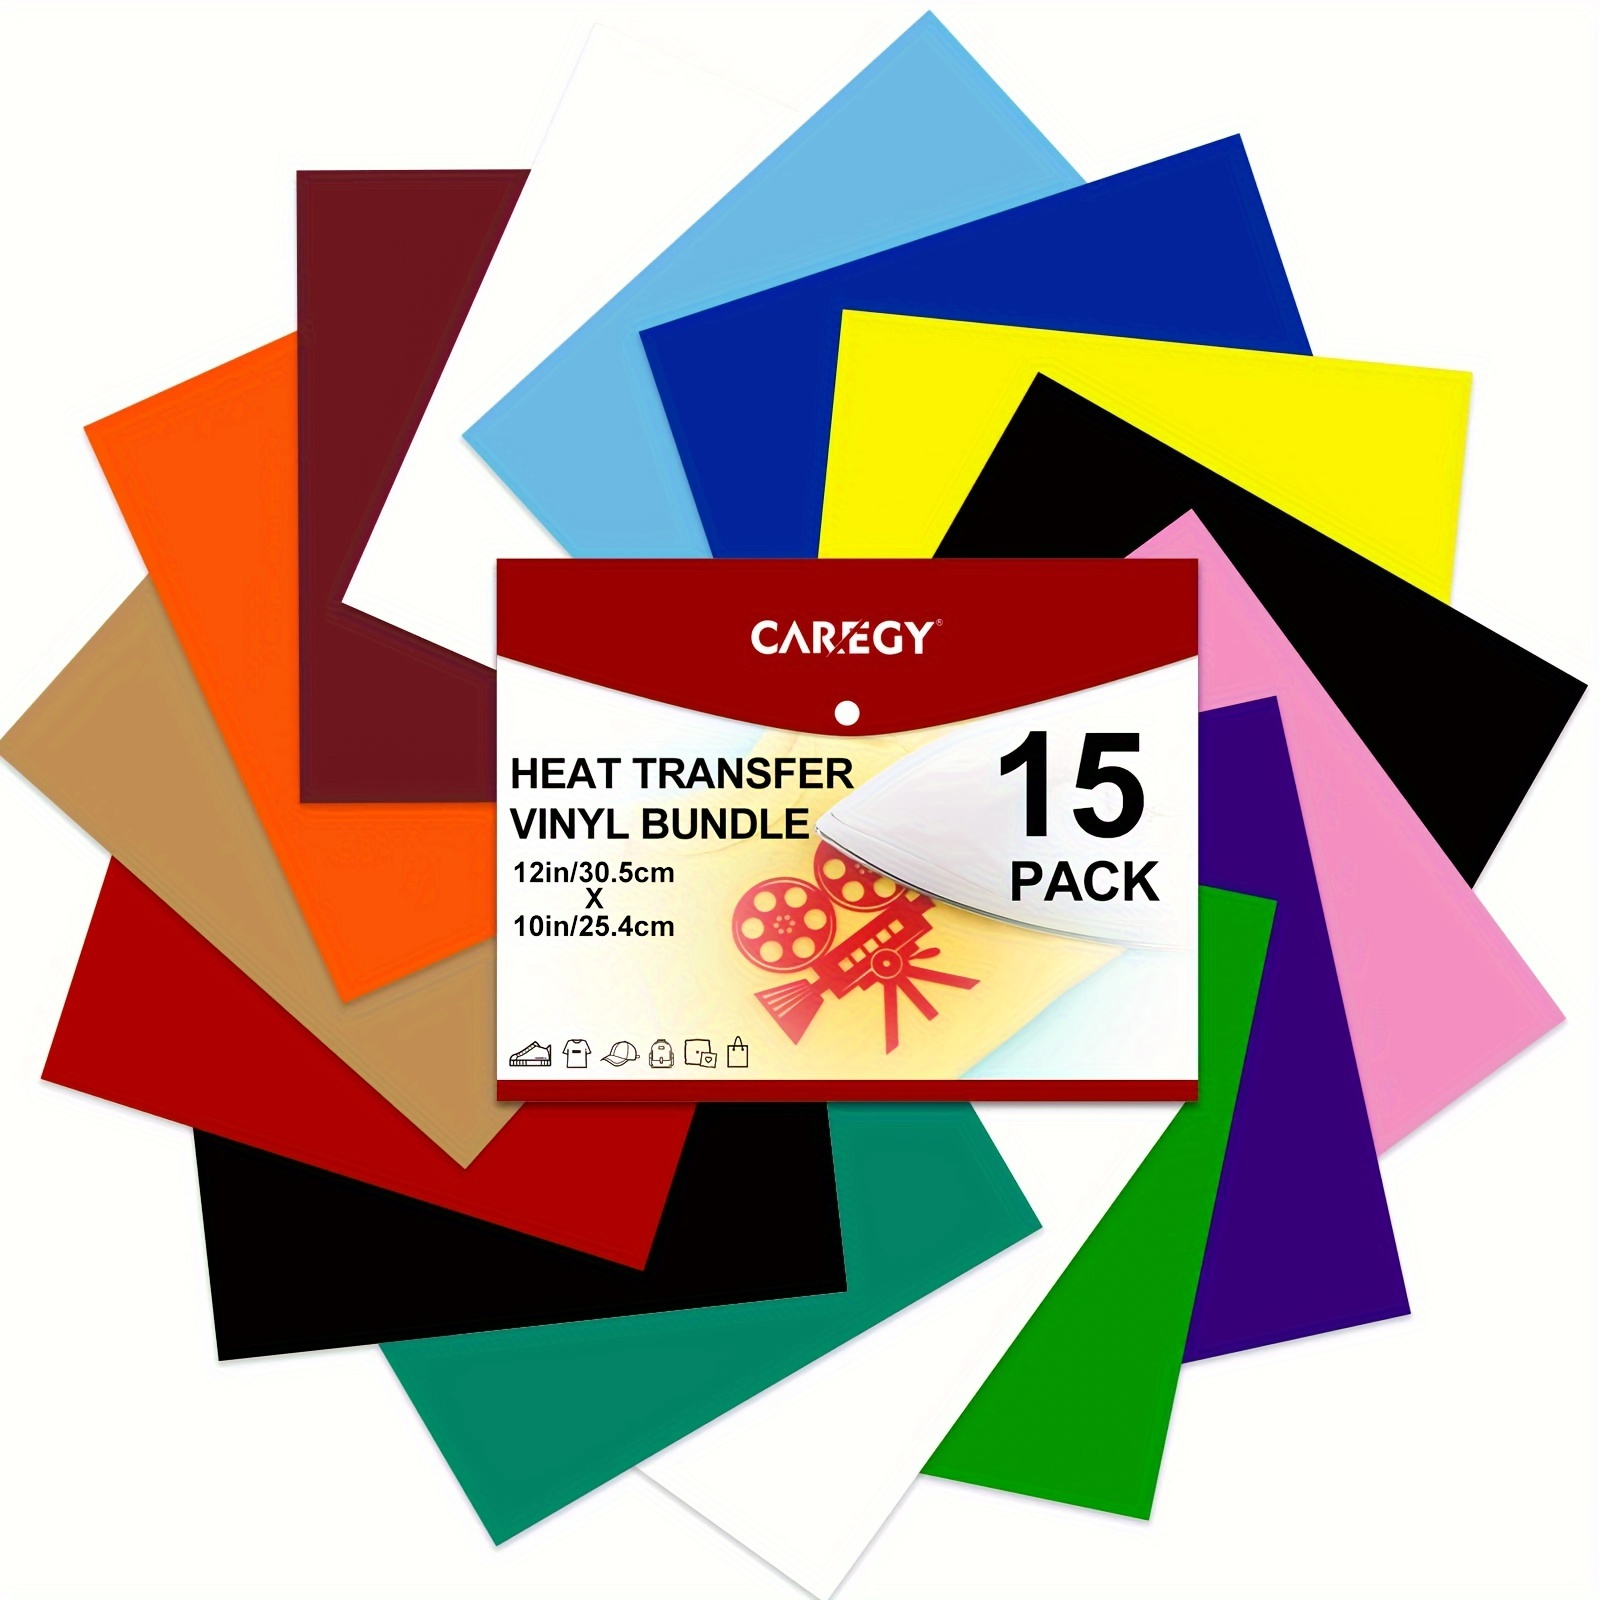 CAREGY HTV 12 x 25ft Roll - Iron On Heat Transfer Vinyl (Red)